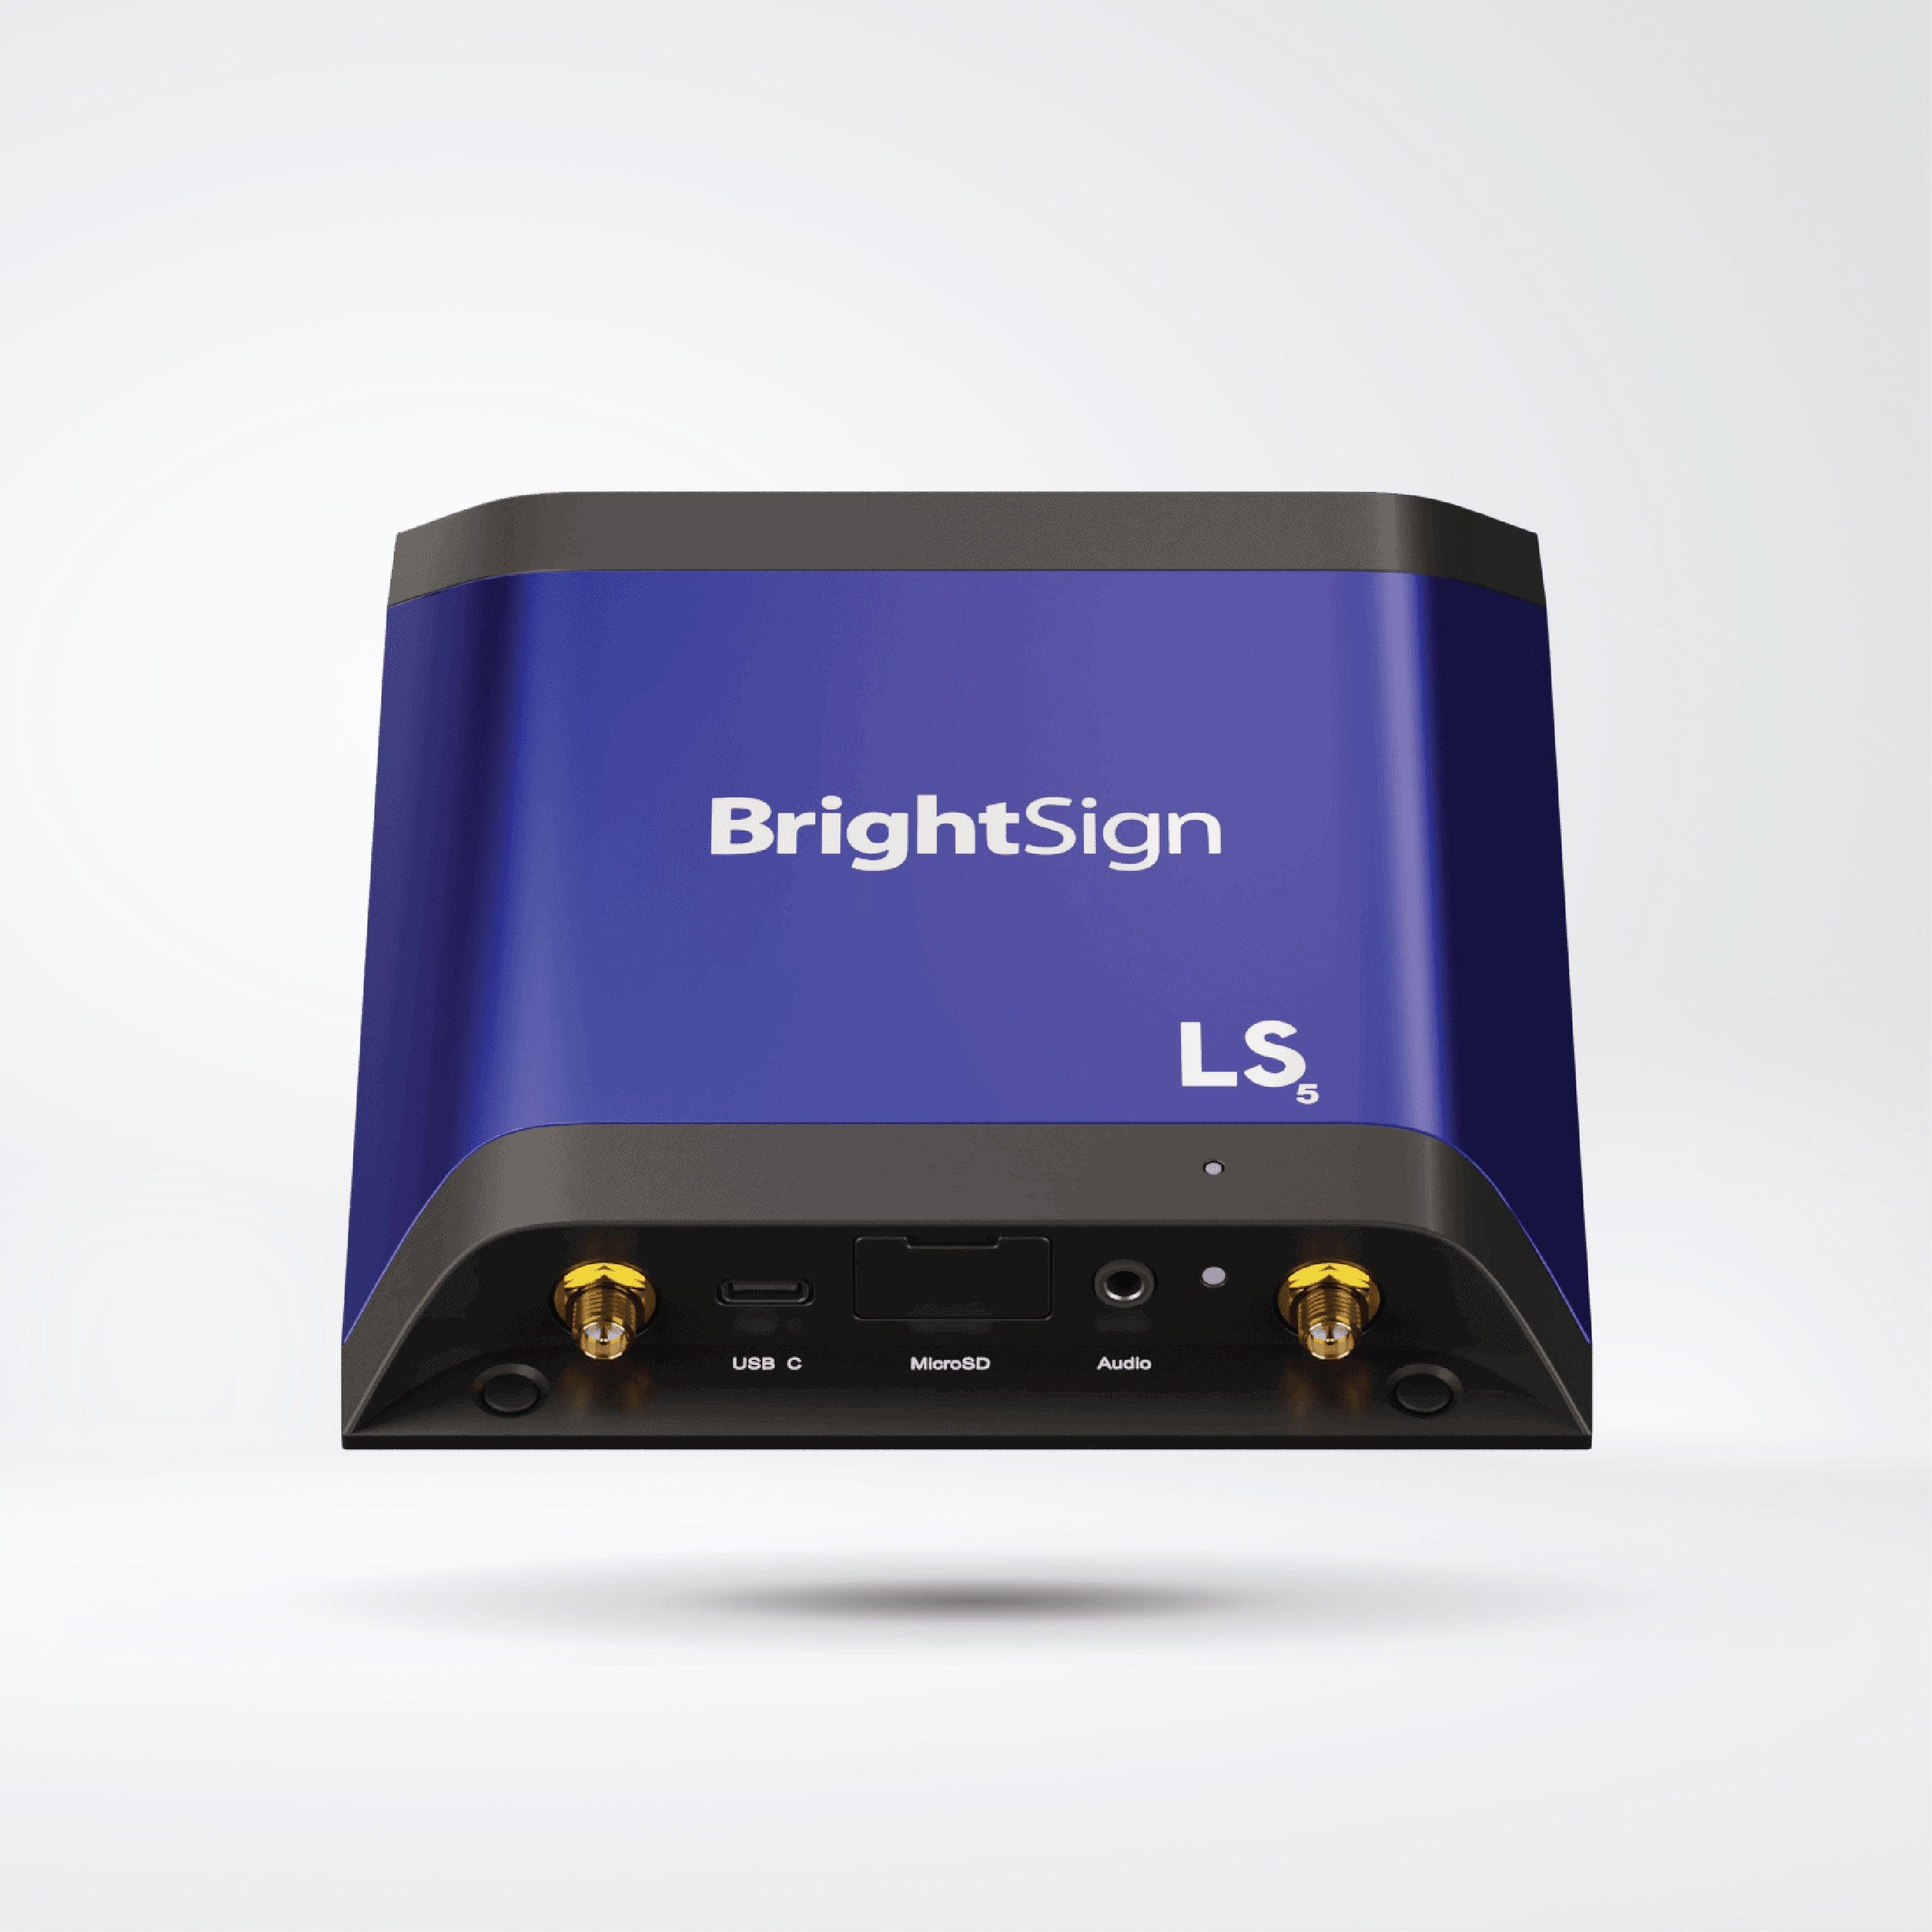 LS445 Low-Cost 4K Digital Signage Player + 64GB Micro SD - Riverplus